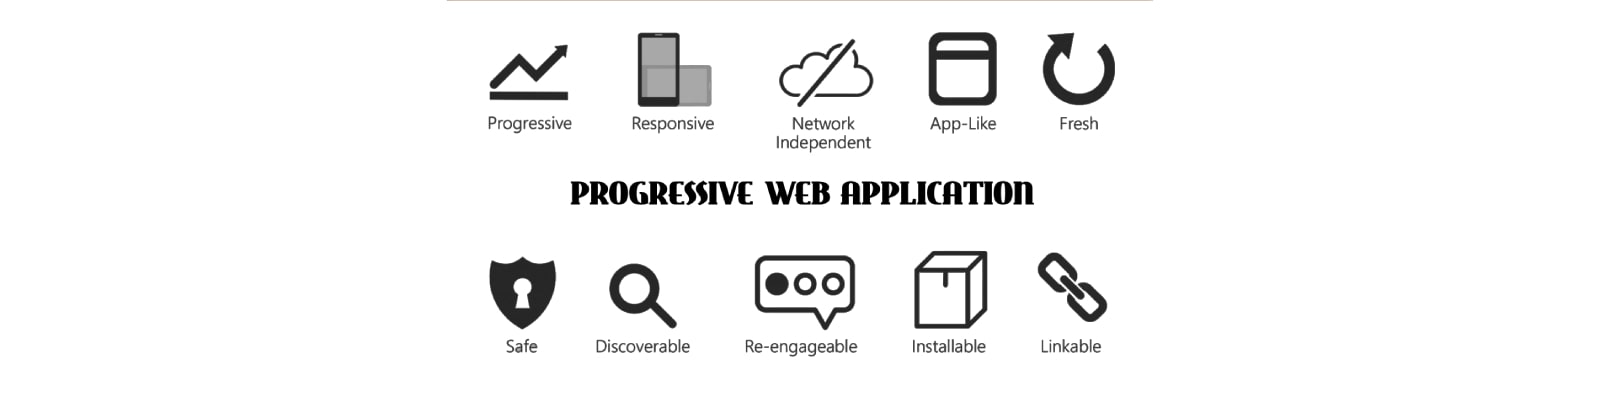 What is a Progressive Web Application